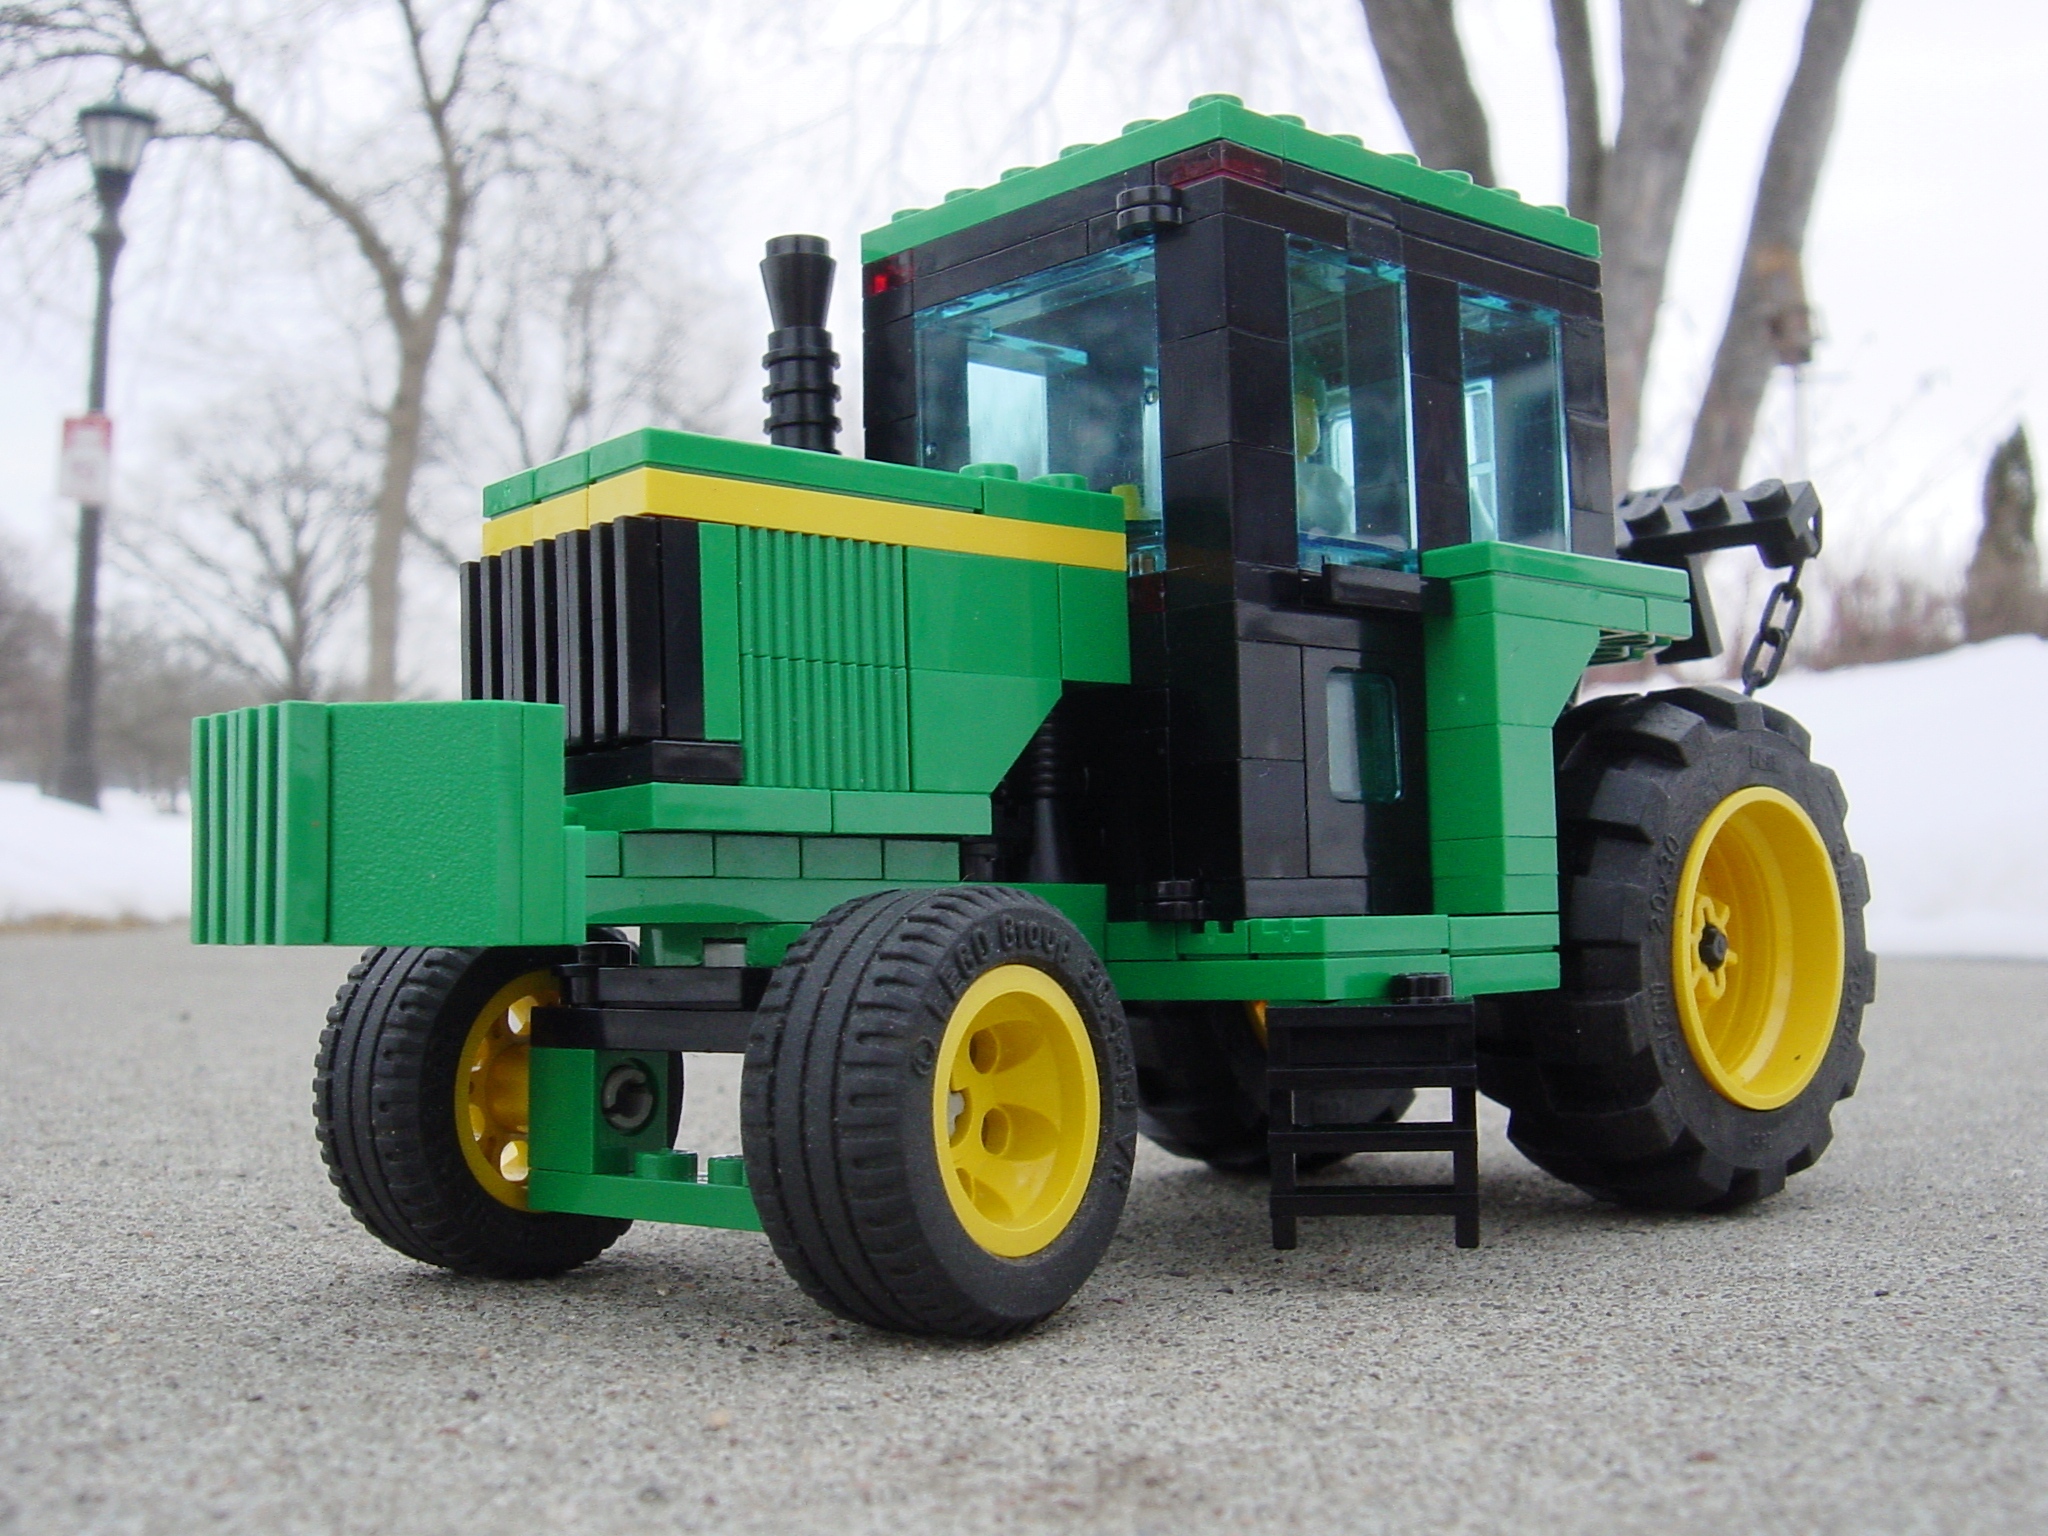 John Deere Tractor 001 | Flickr - Photo Sharing!